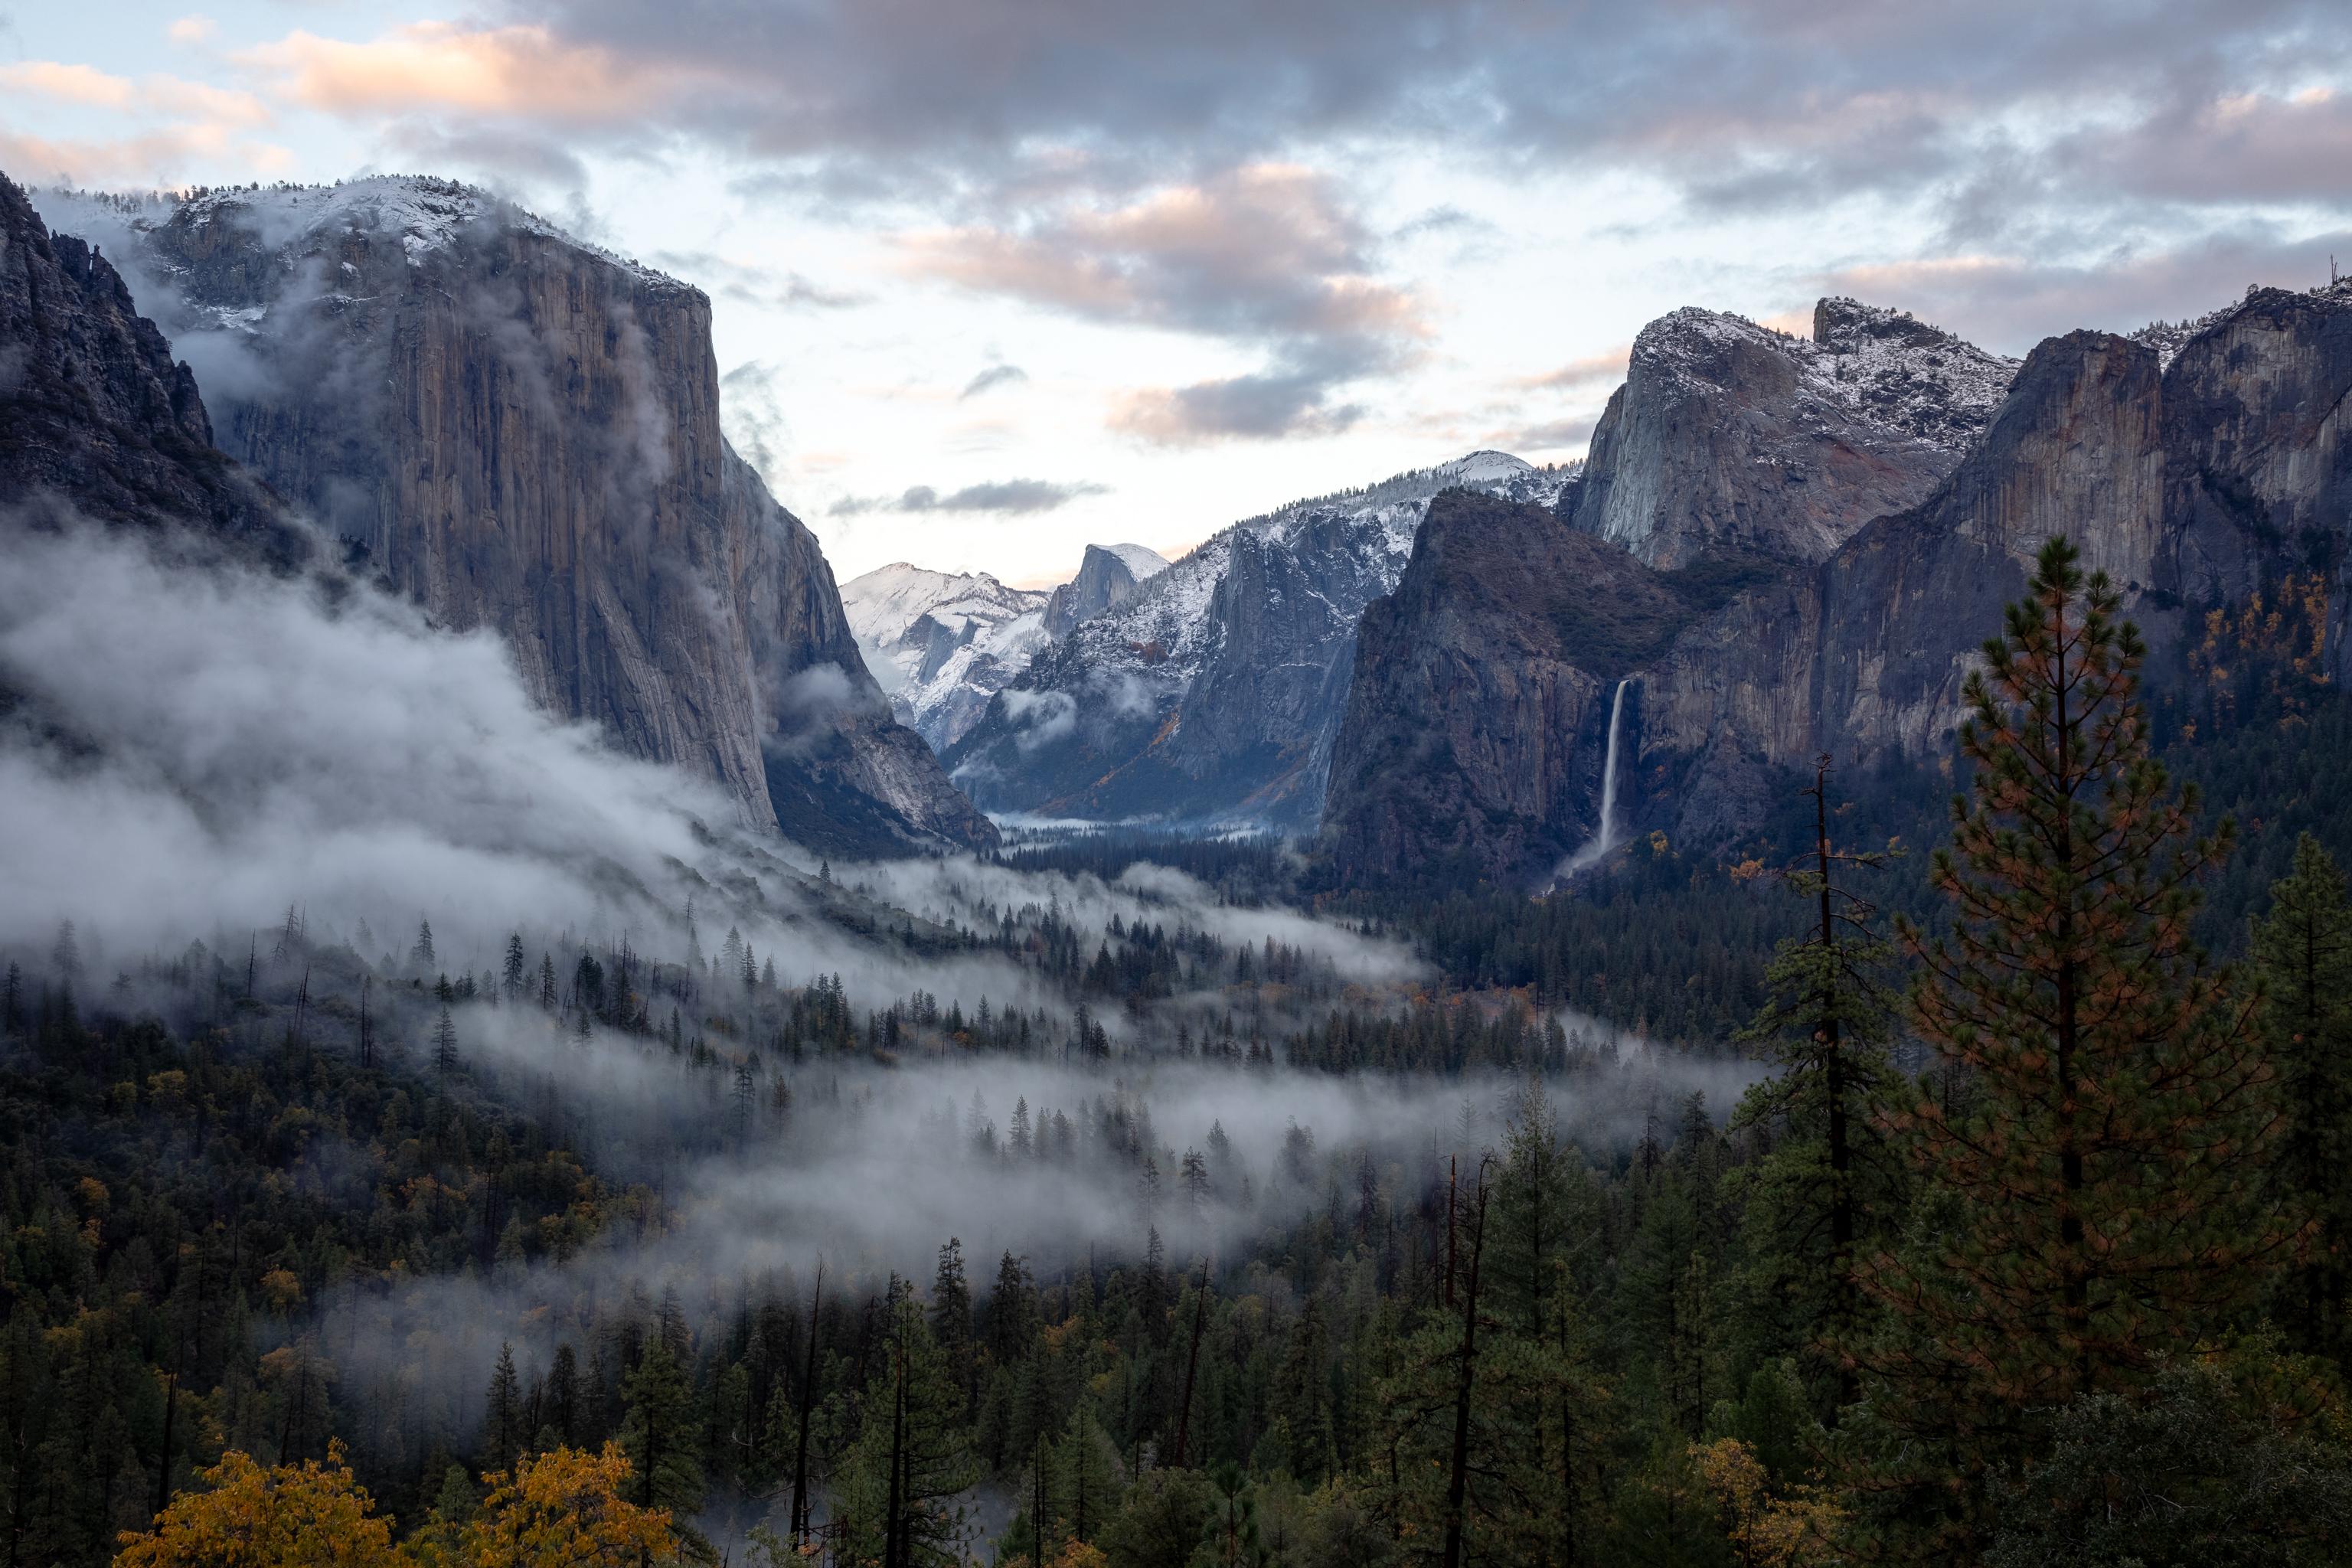 General 3072x2048 Yosemite National Park California USA landscape mountains nature forest mist fall Bridalveil Fall